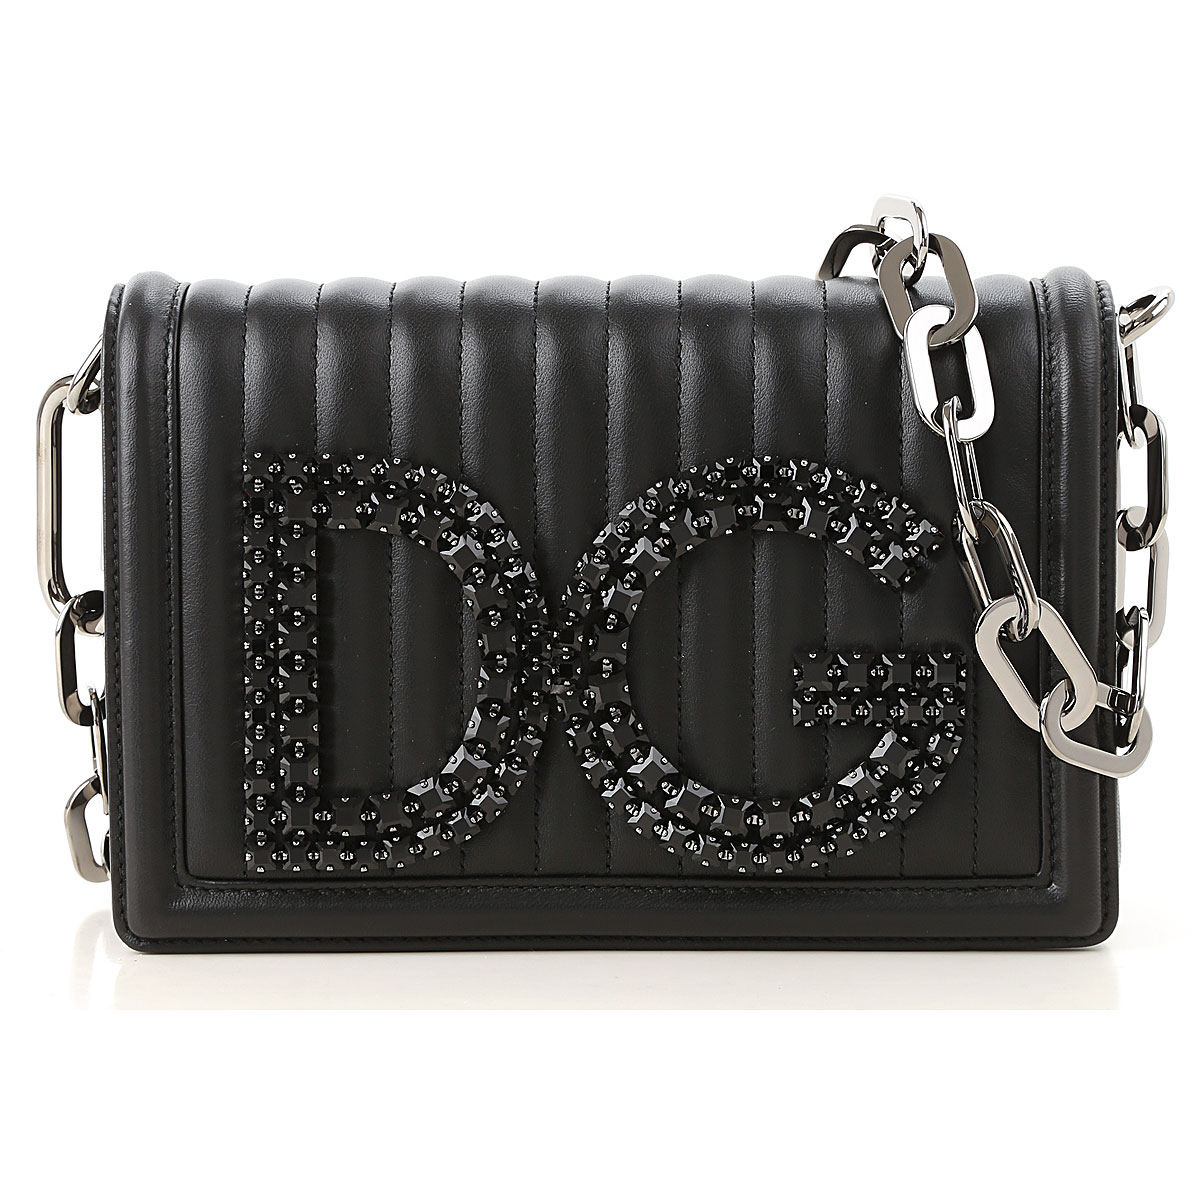 Handbags Dolce & Gabbana, Style code: bb6498-au309-80999